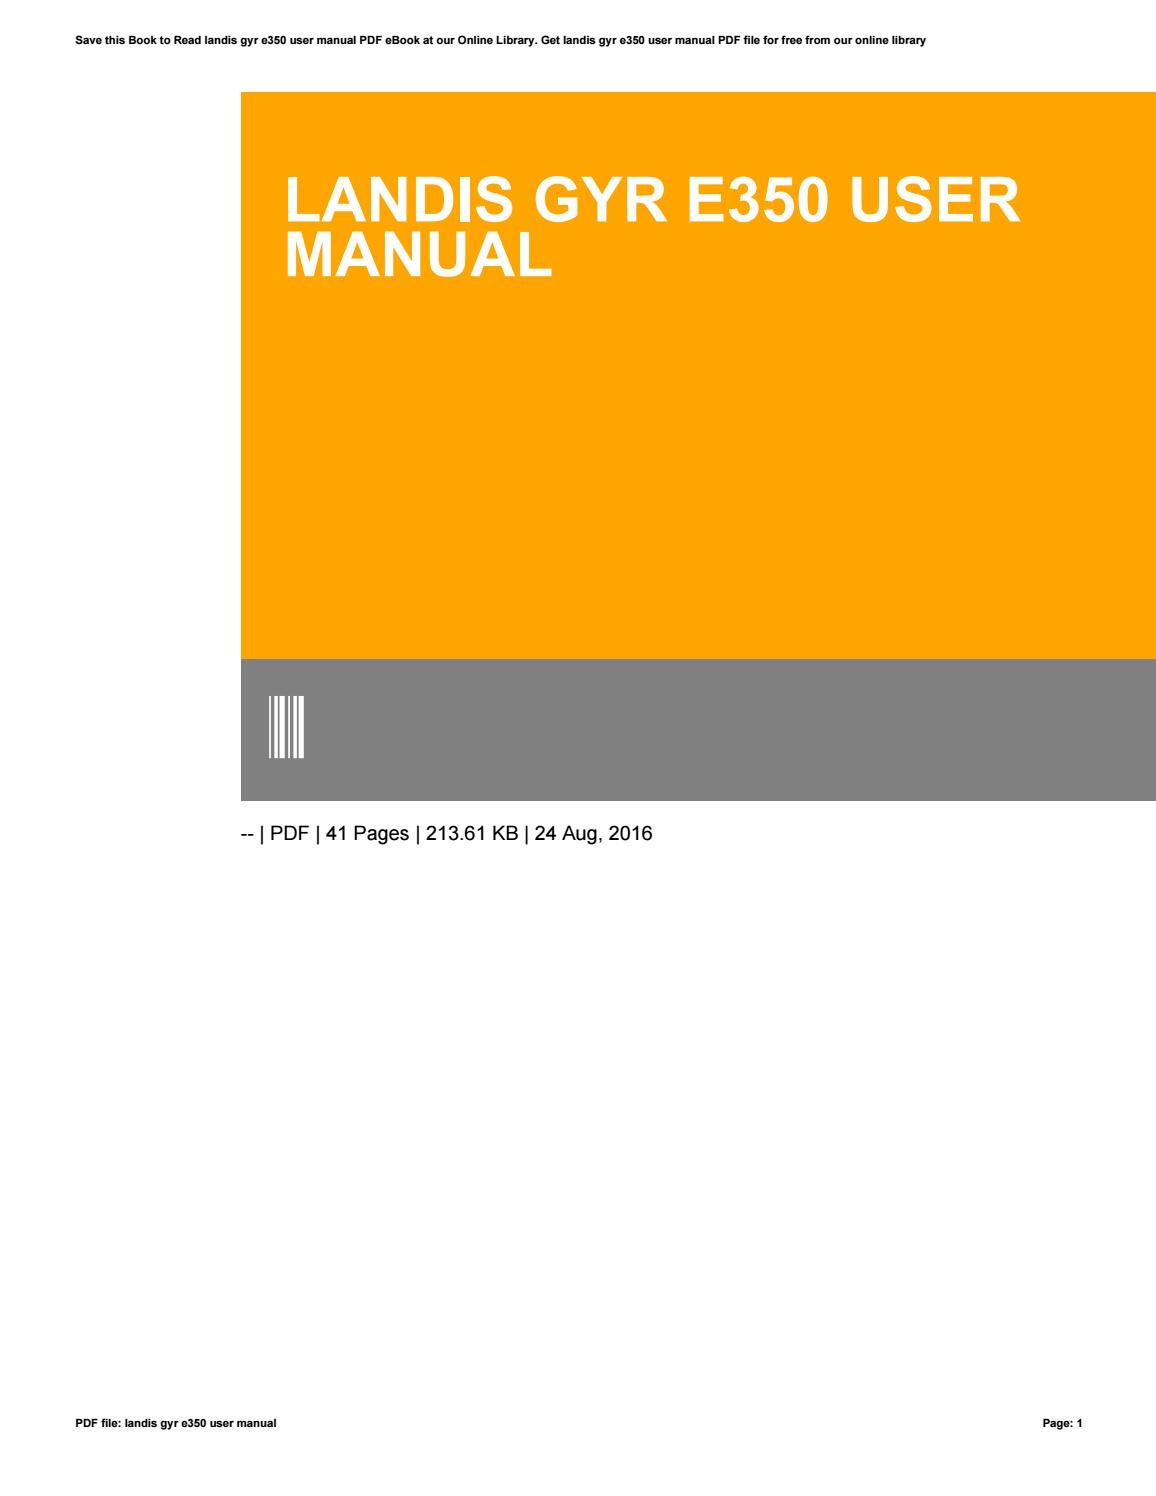 landis gyr e350 u3300 user manual